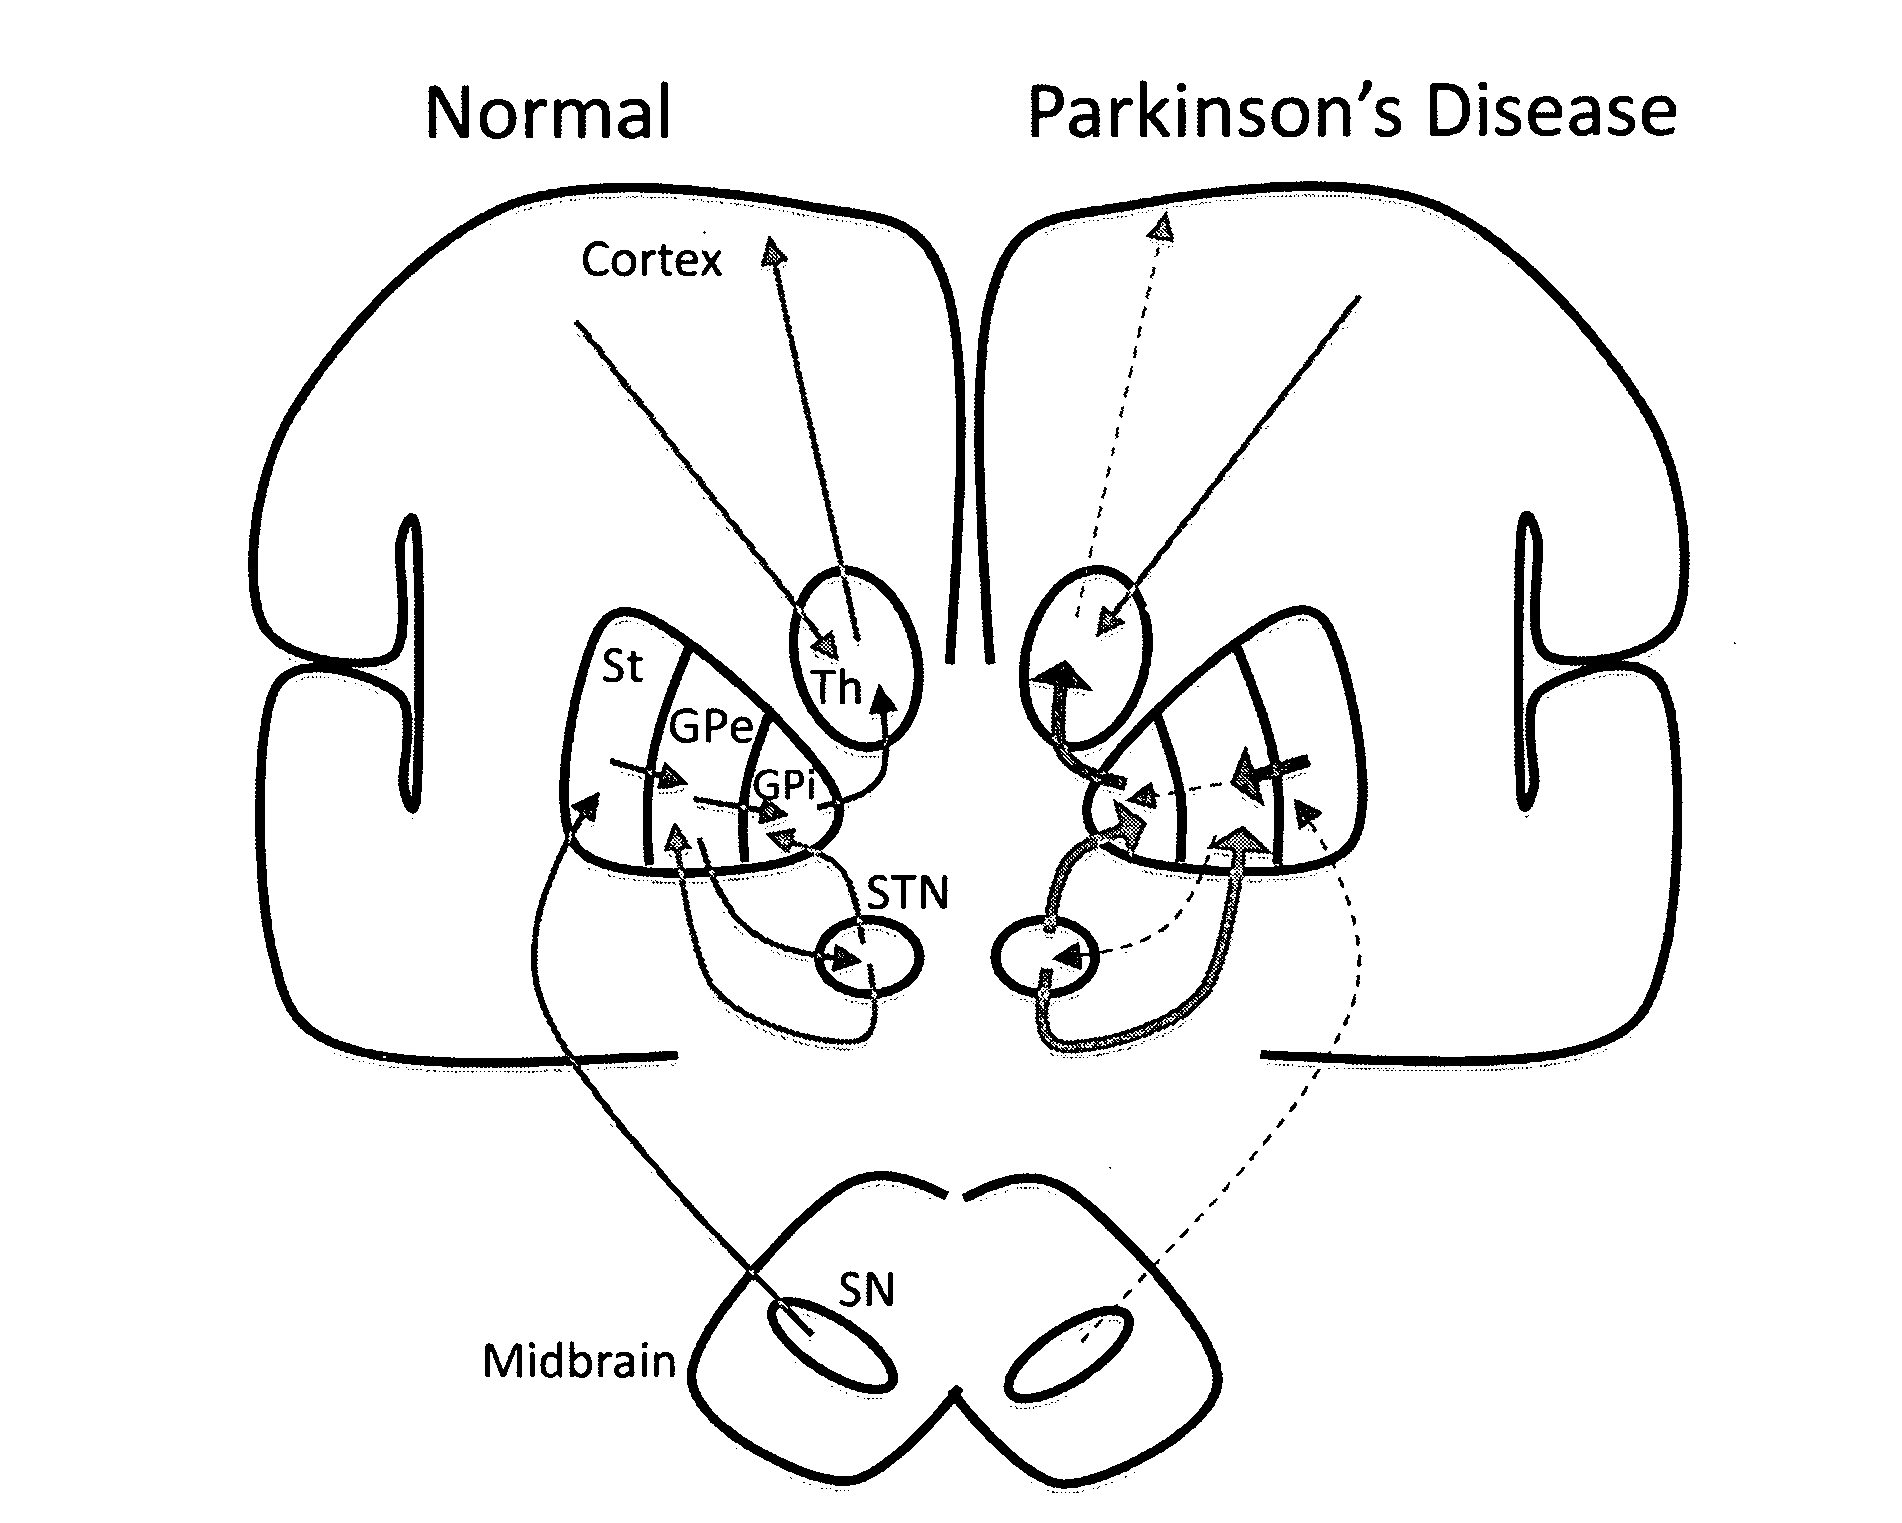 Model Based Control of Parkinson's Disease